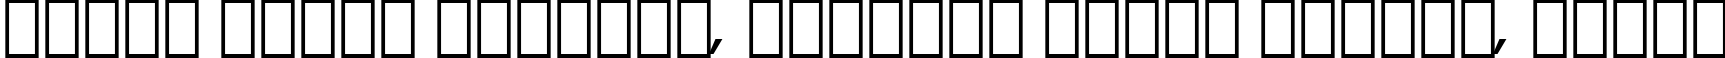 Пример написания шрифтом Zurich Condensed Italic BT текста на белорусском